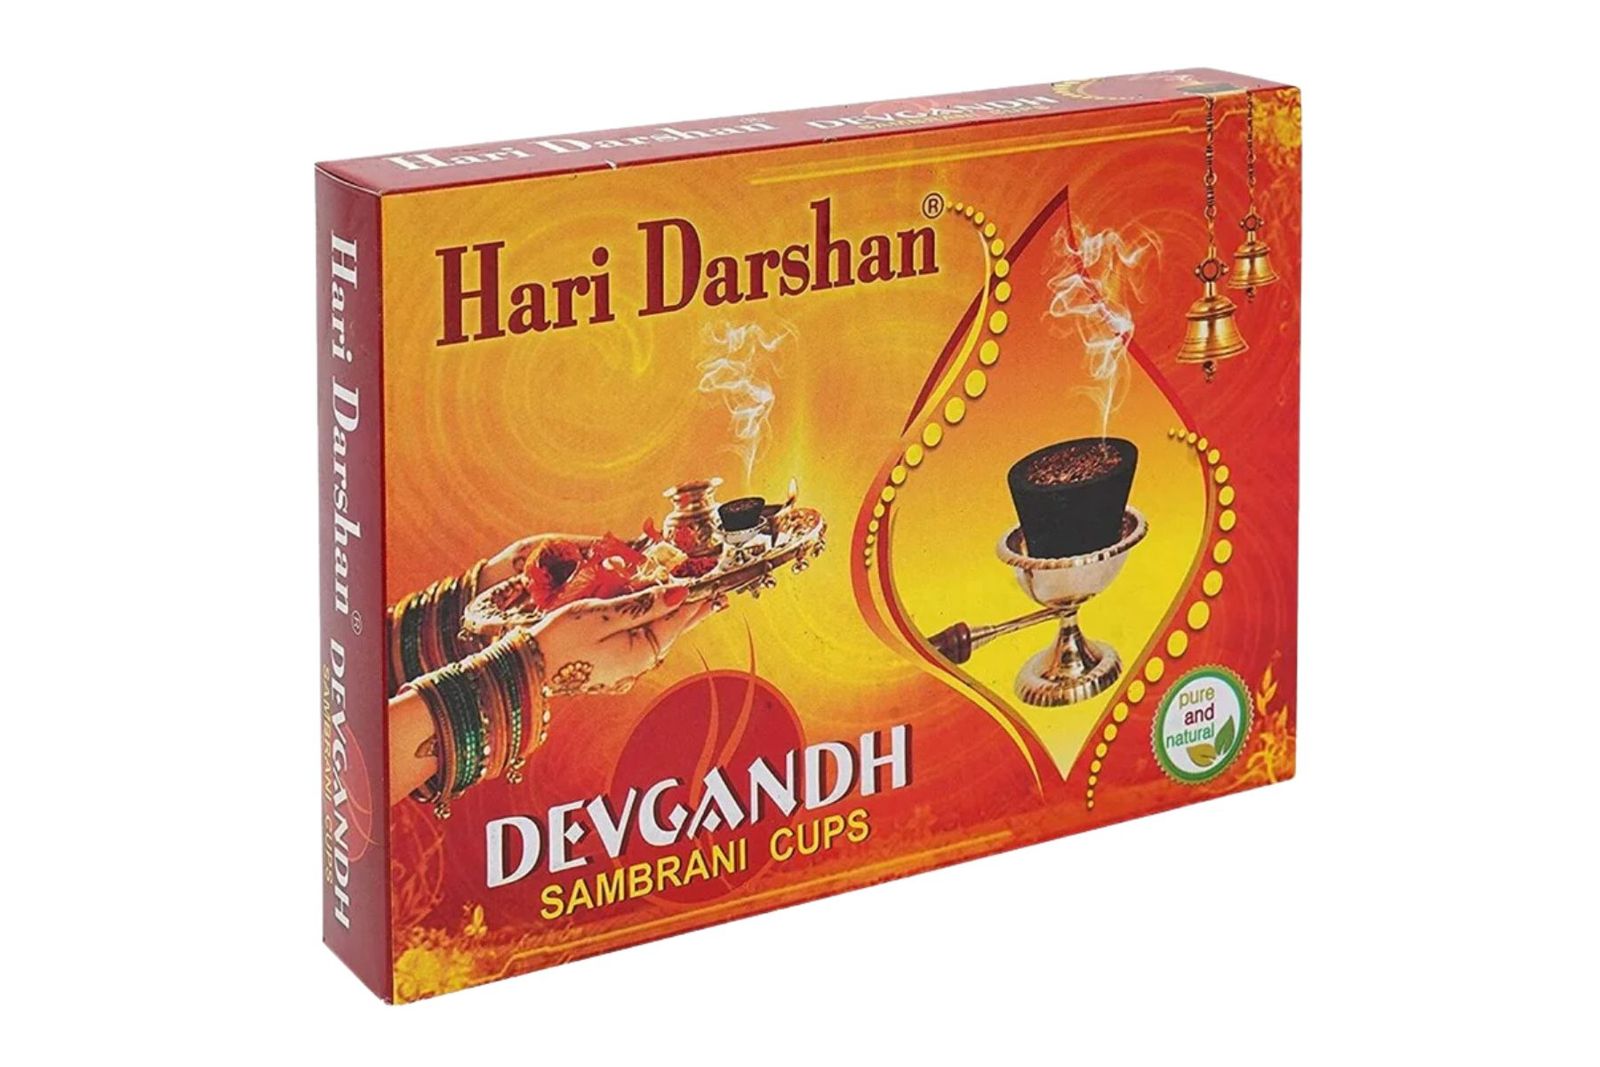 Hari Darshan Four In One Sambrani Cups